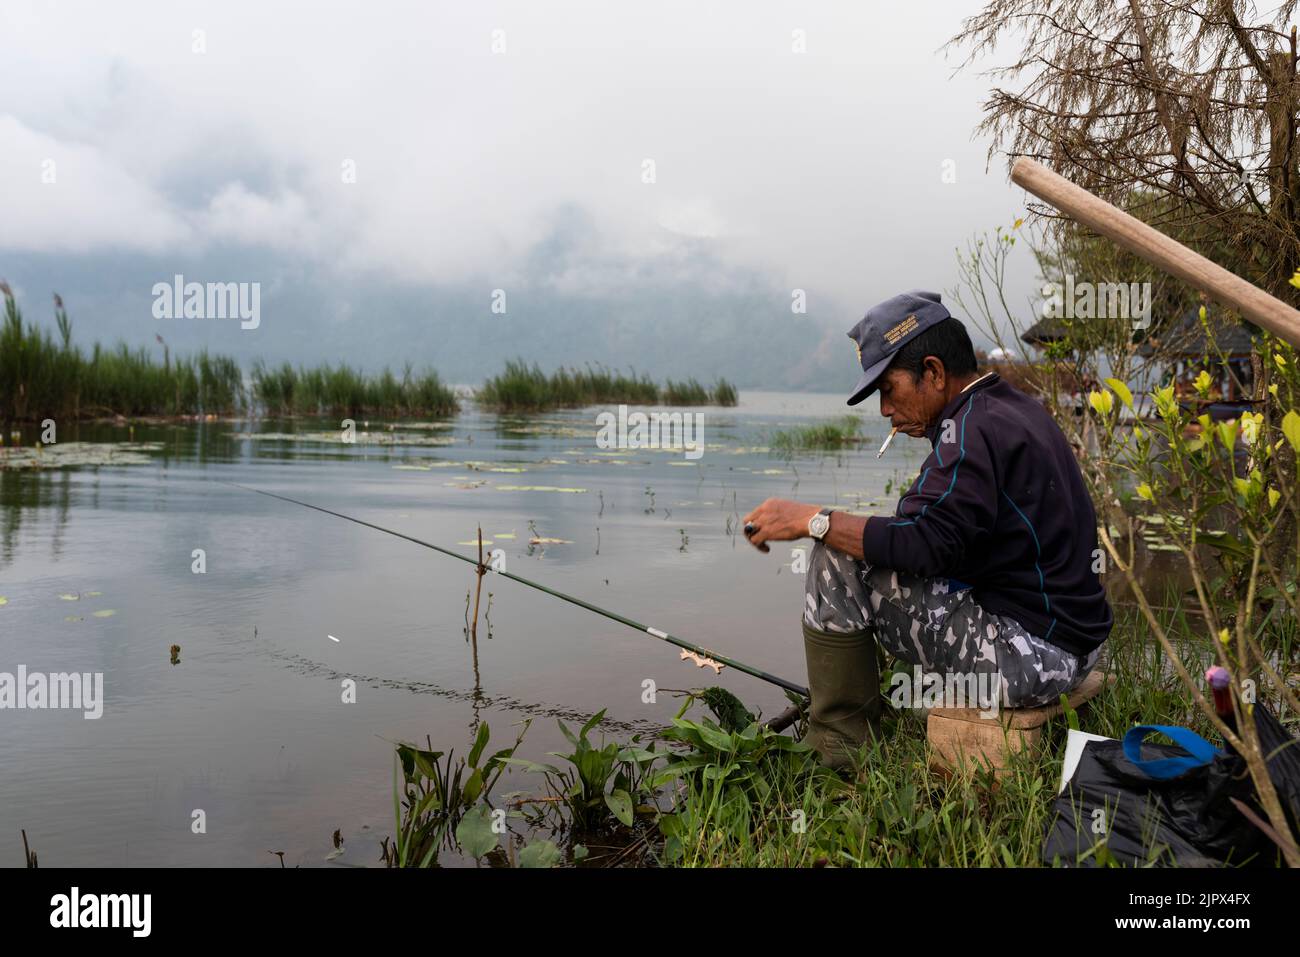 UBUD, BALI, INDONESIA, MAY 15, 2017; Portrait of old man fishing by Danau Bratan lake. Indonesian man image. Stock Photo